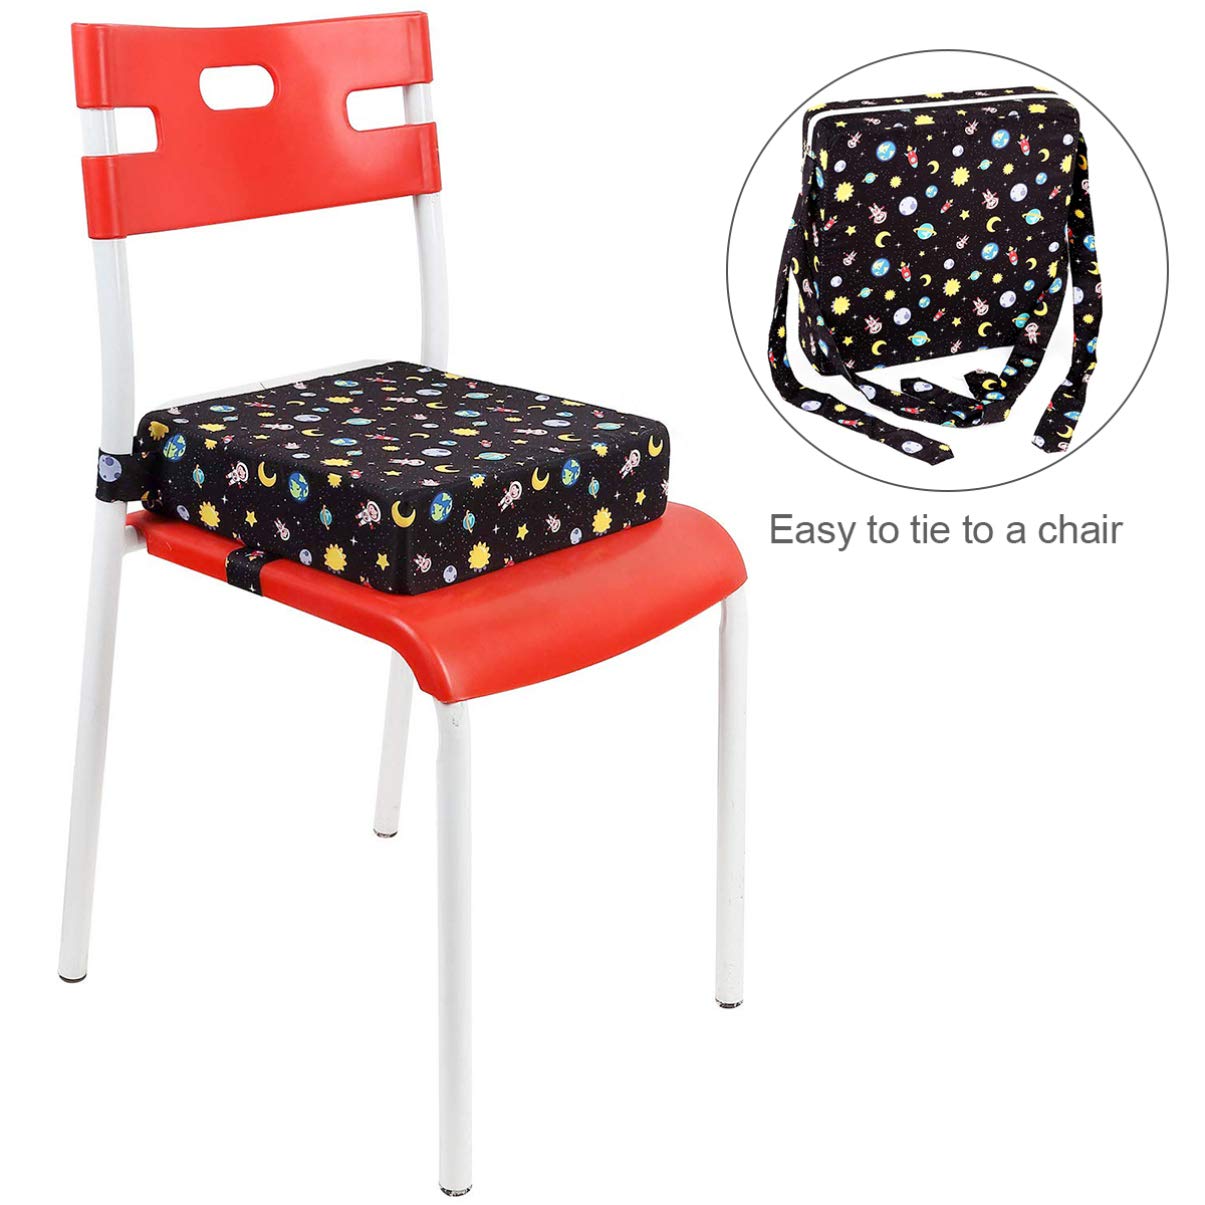 TOYANDONA Kids Chair Cushion Booster Cushion Portable Travel Increasing Cushion Chair Pad Cushion for Dining Table (Black) Toddler Pillows